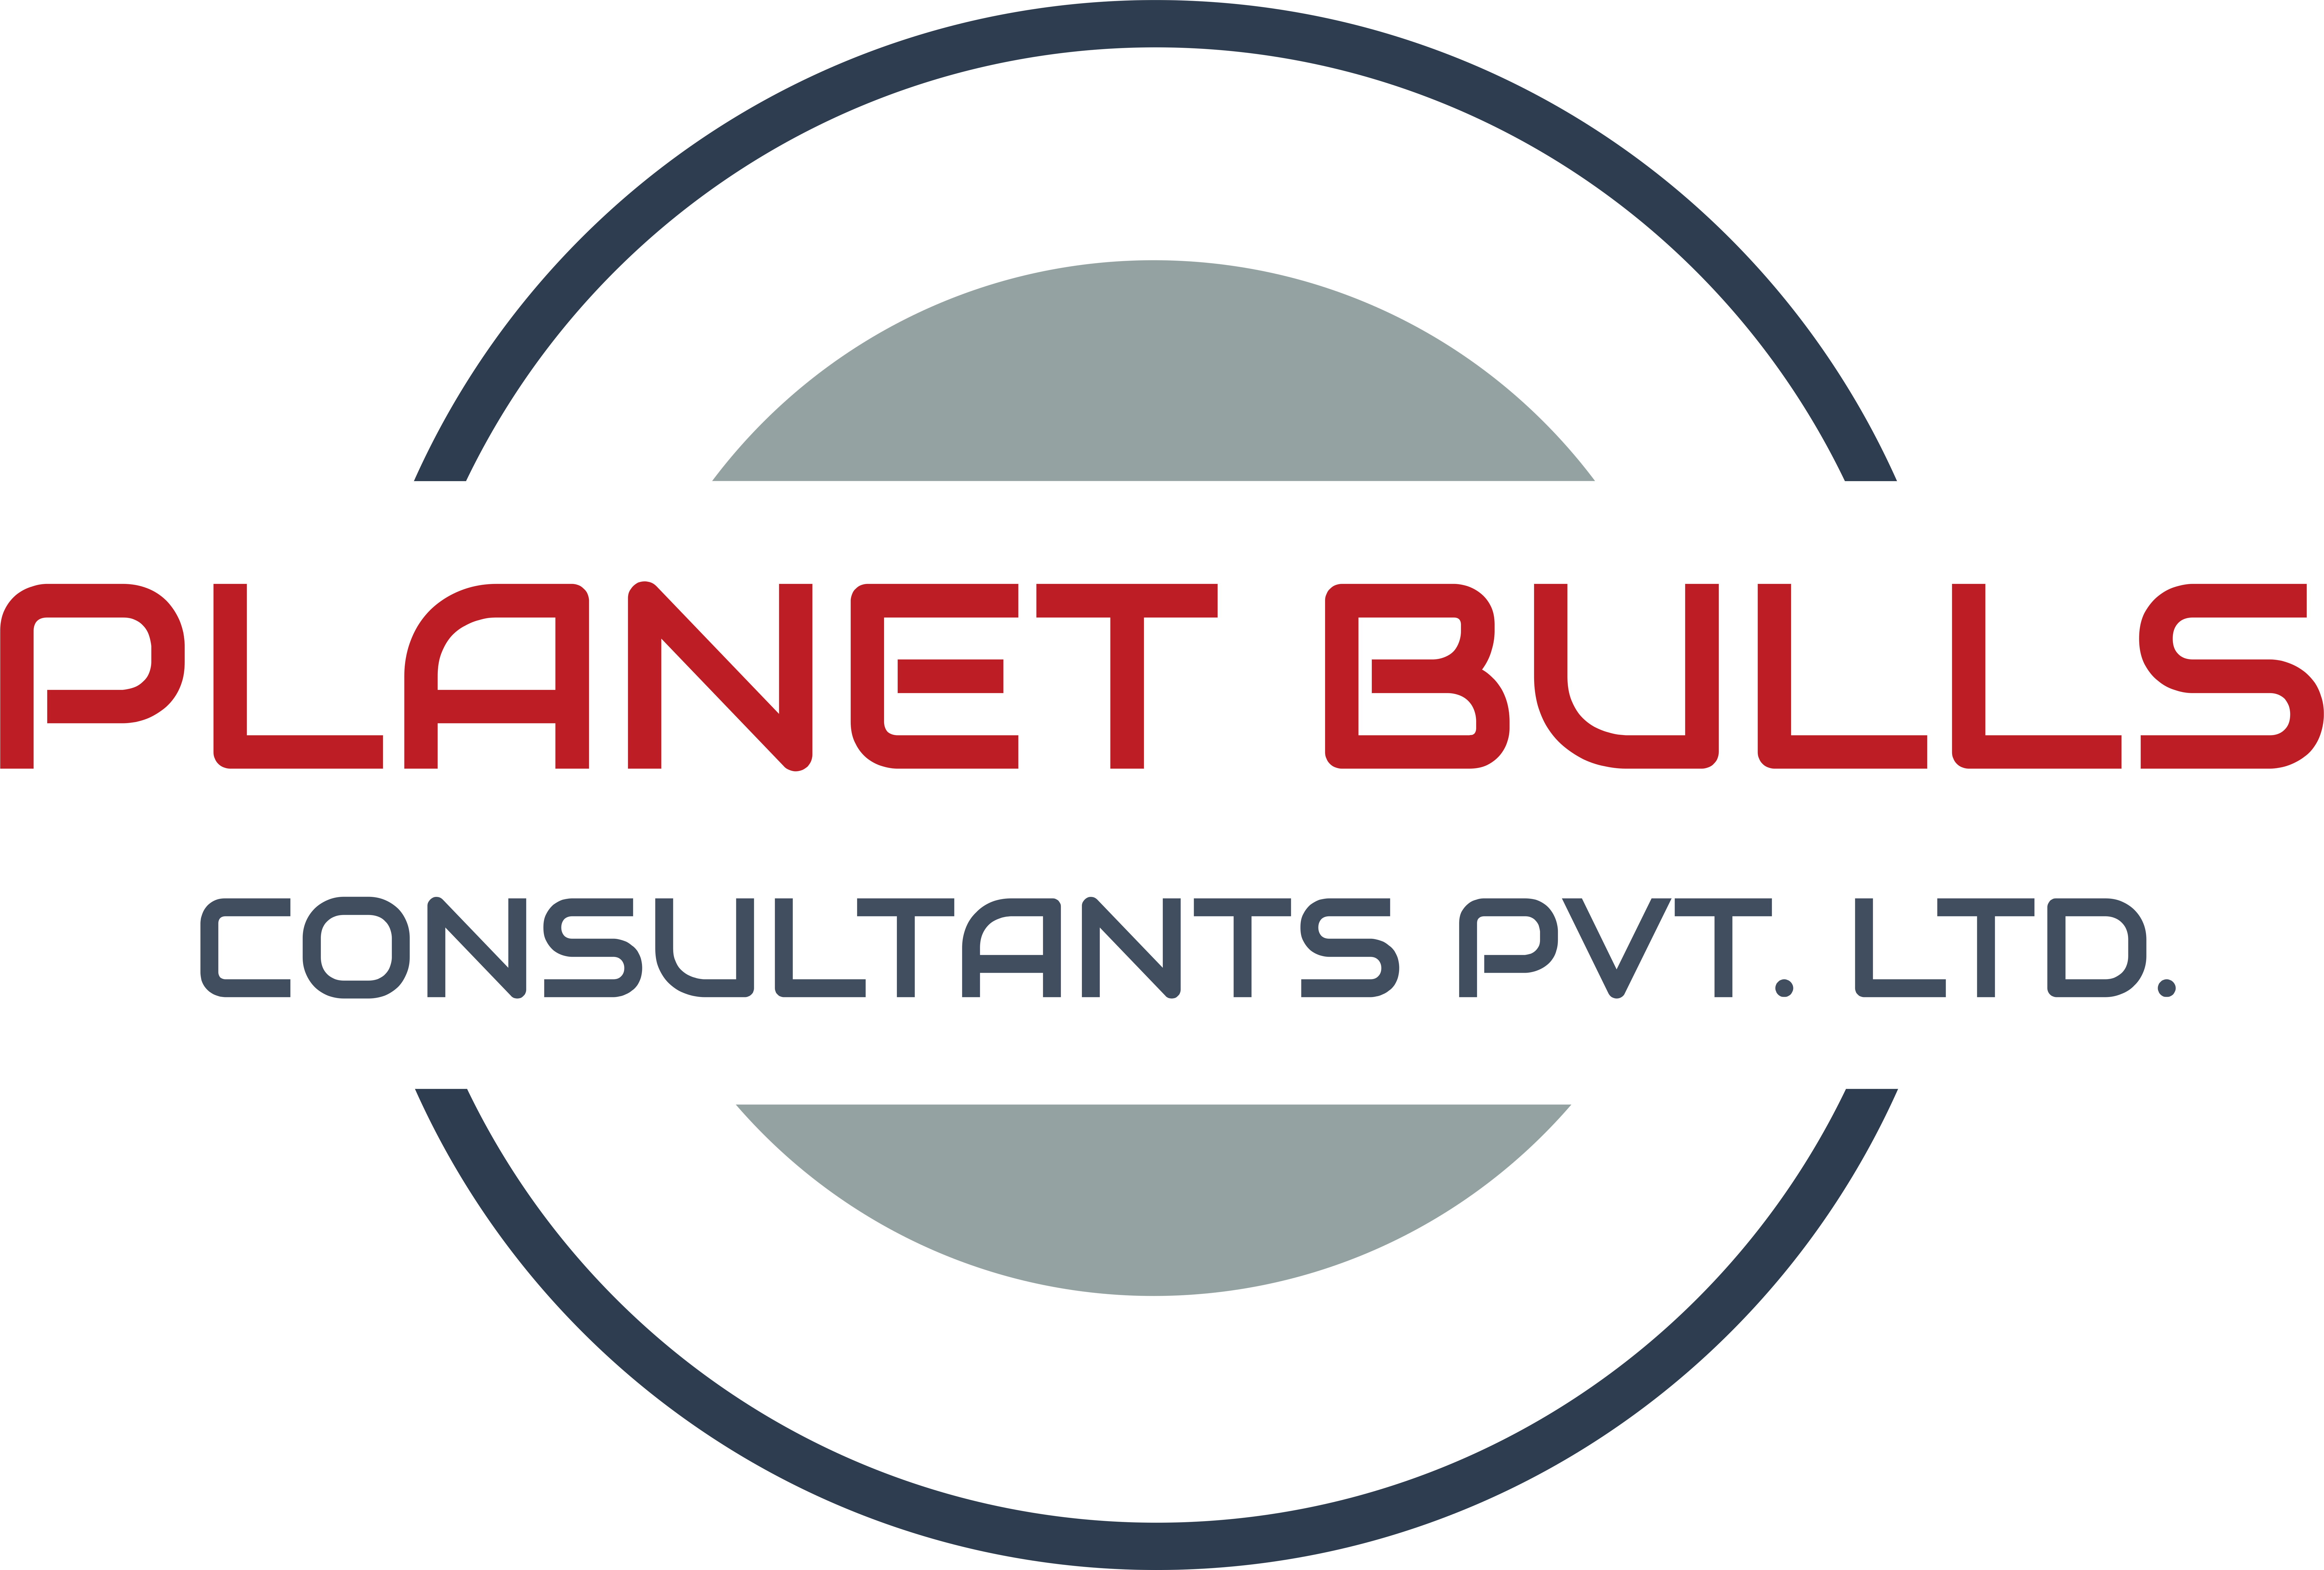 Planet Bulls Consultants Pvt. Ltd.